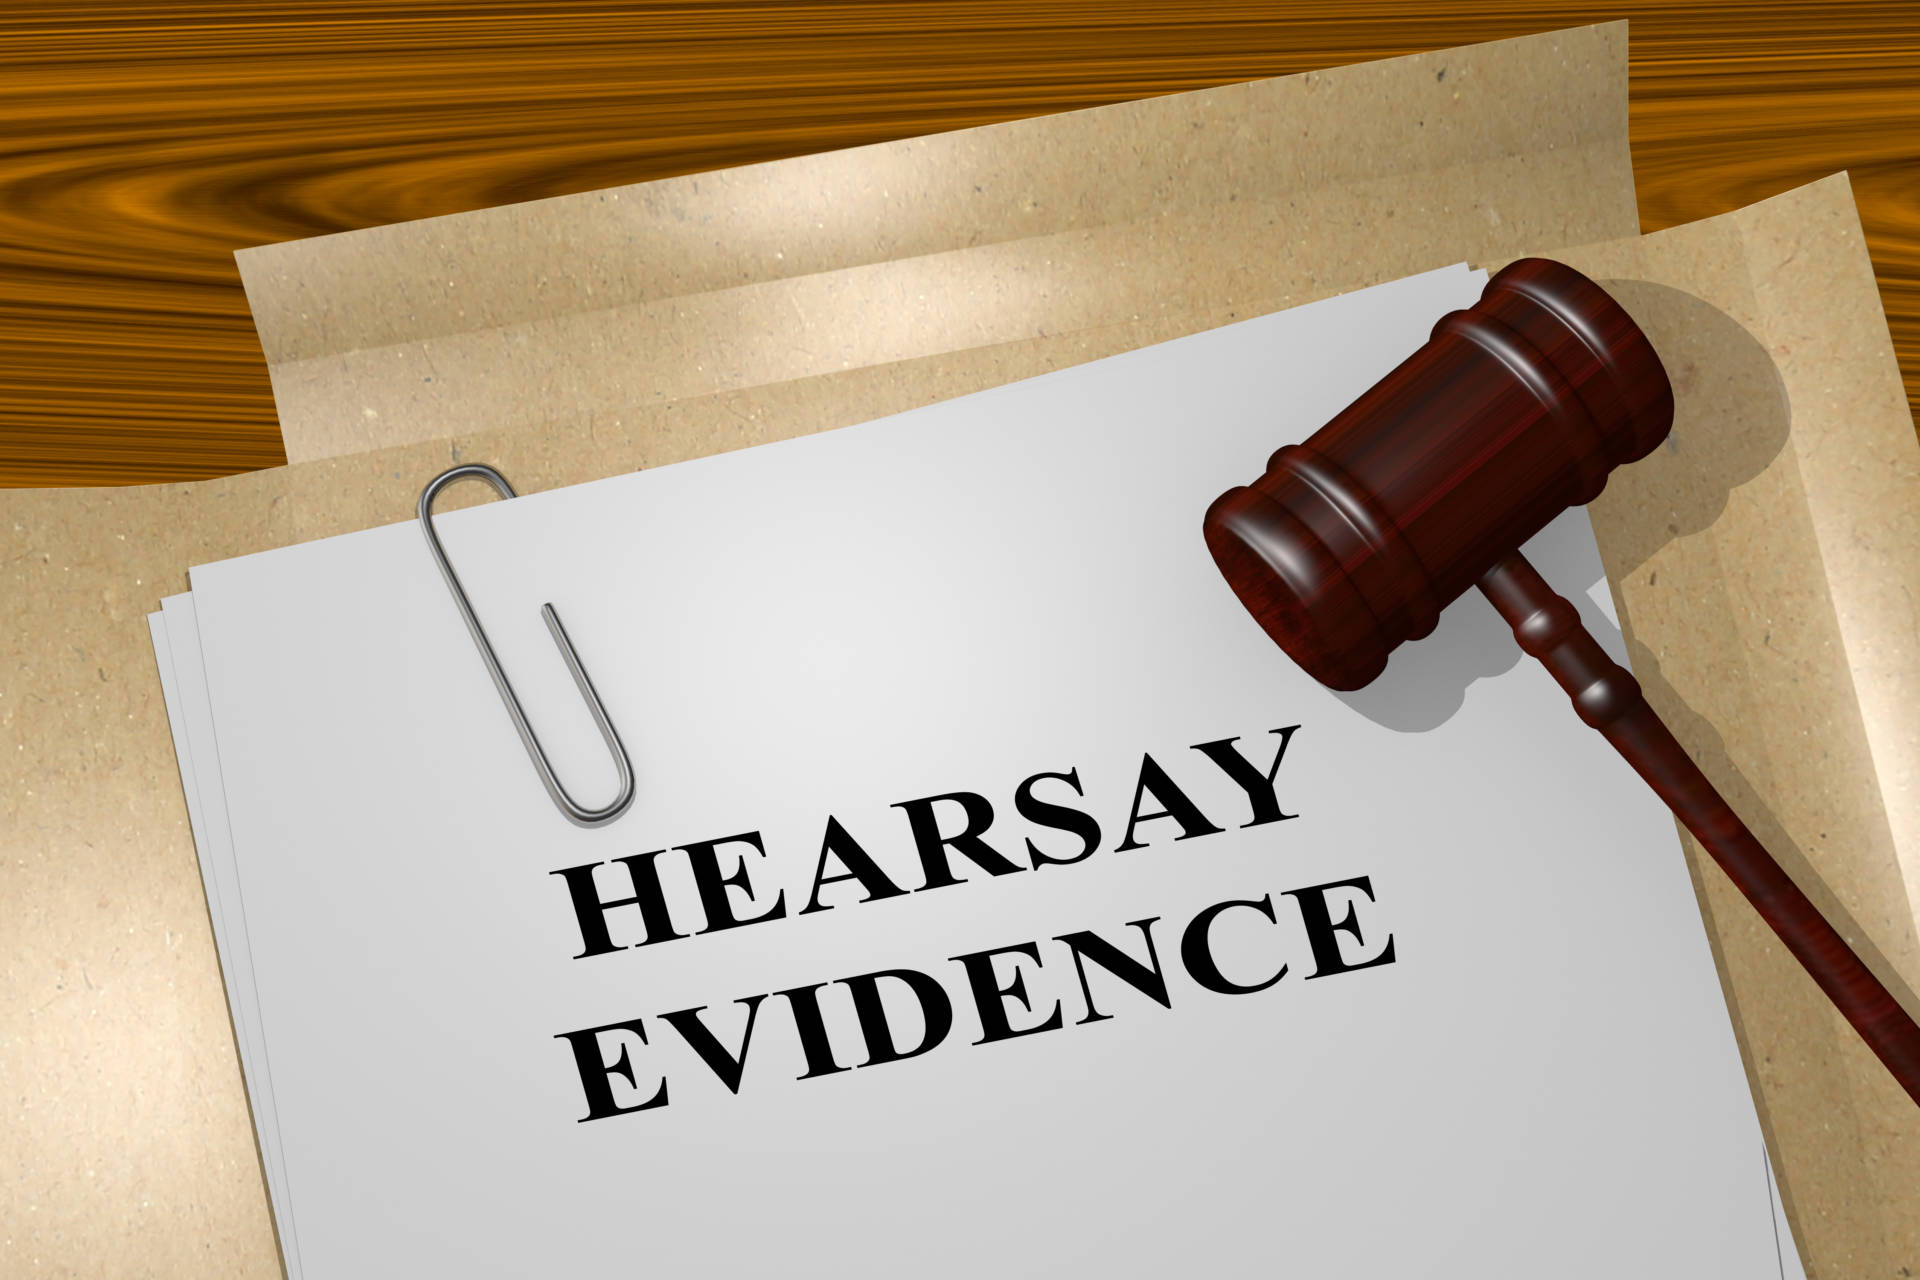 hearsay evidence in the CCMA